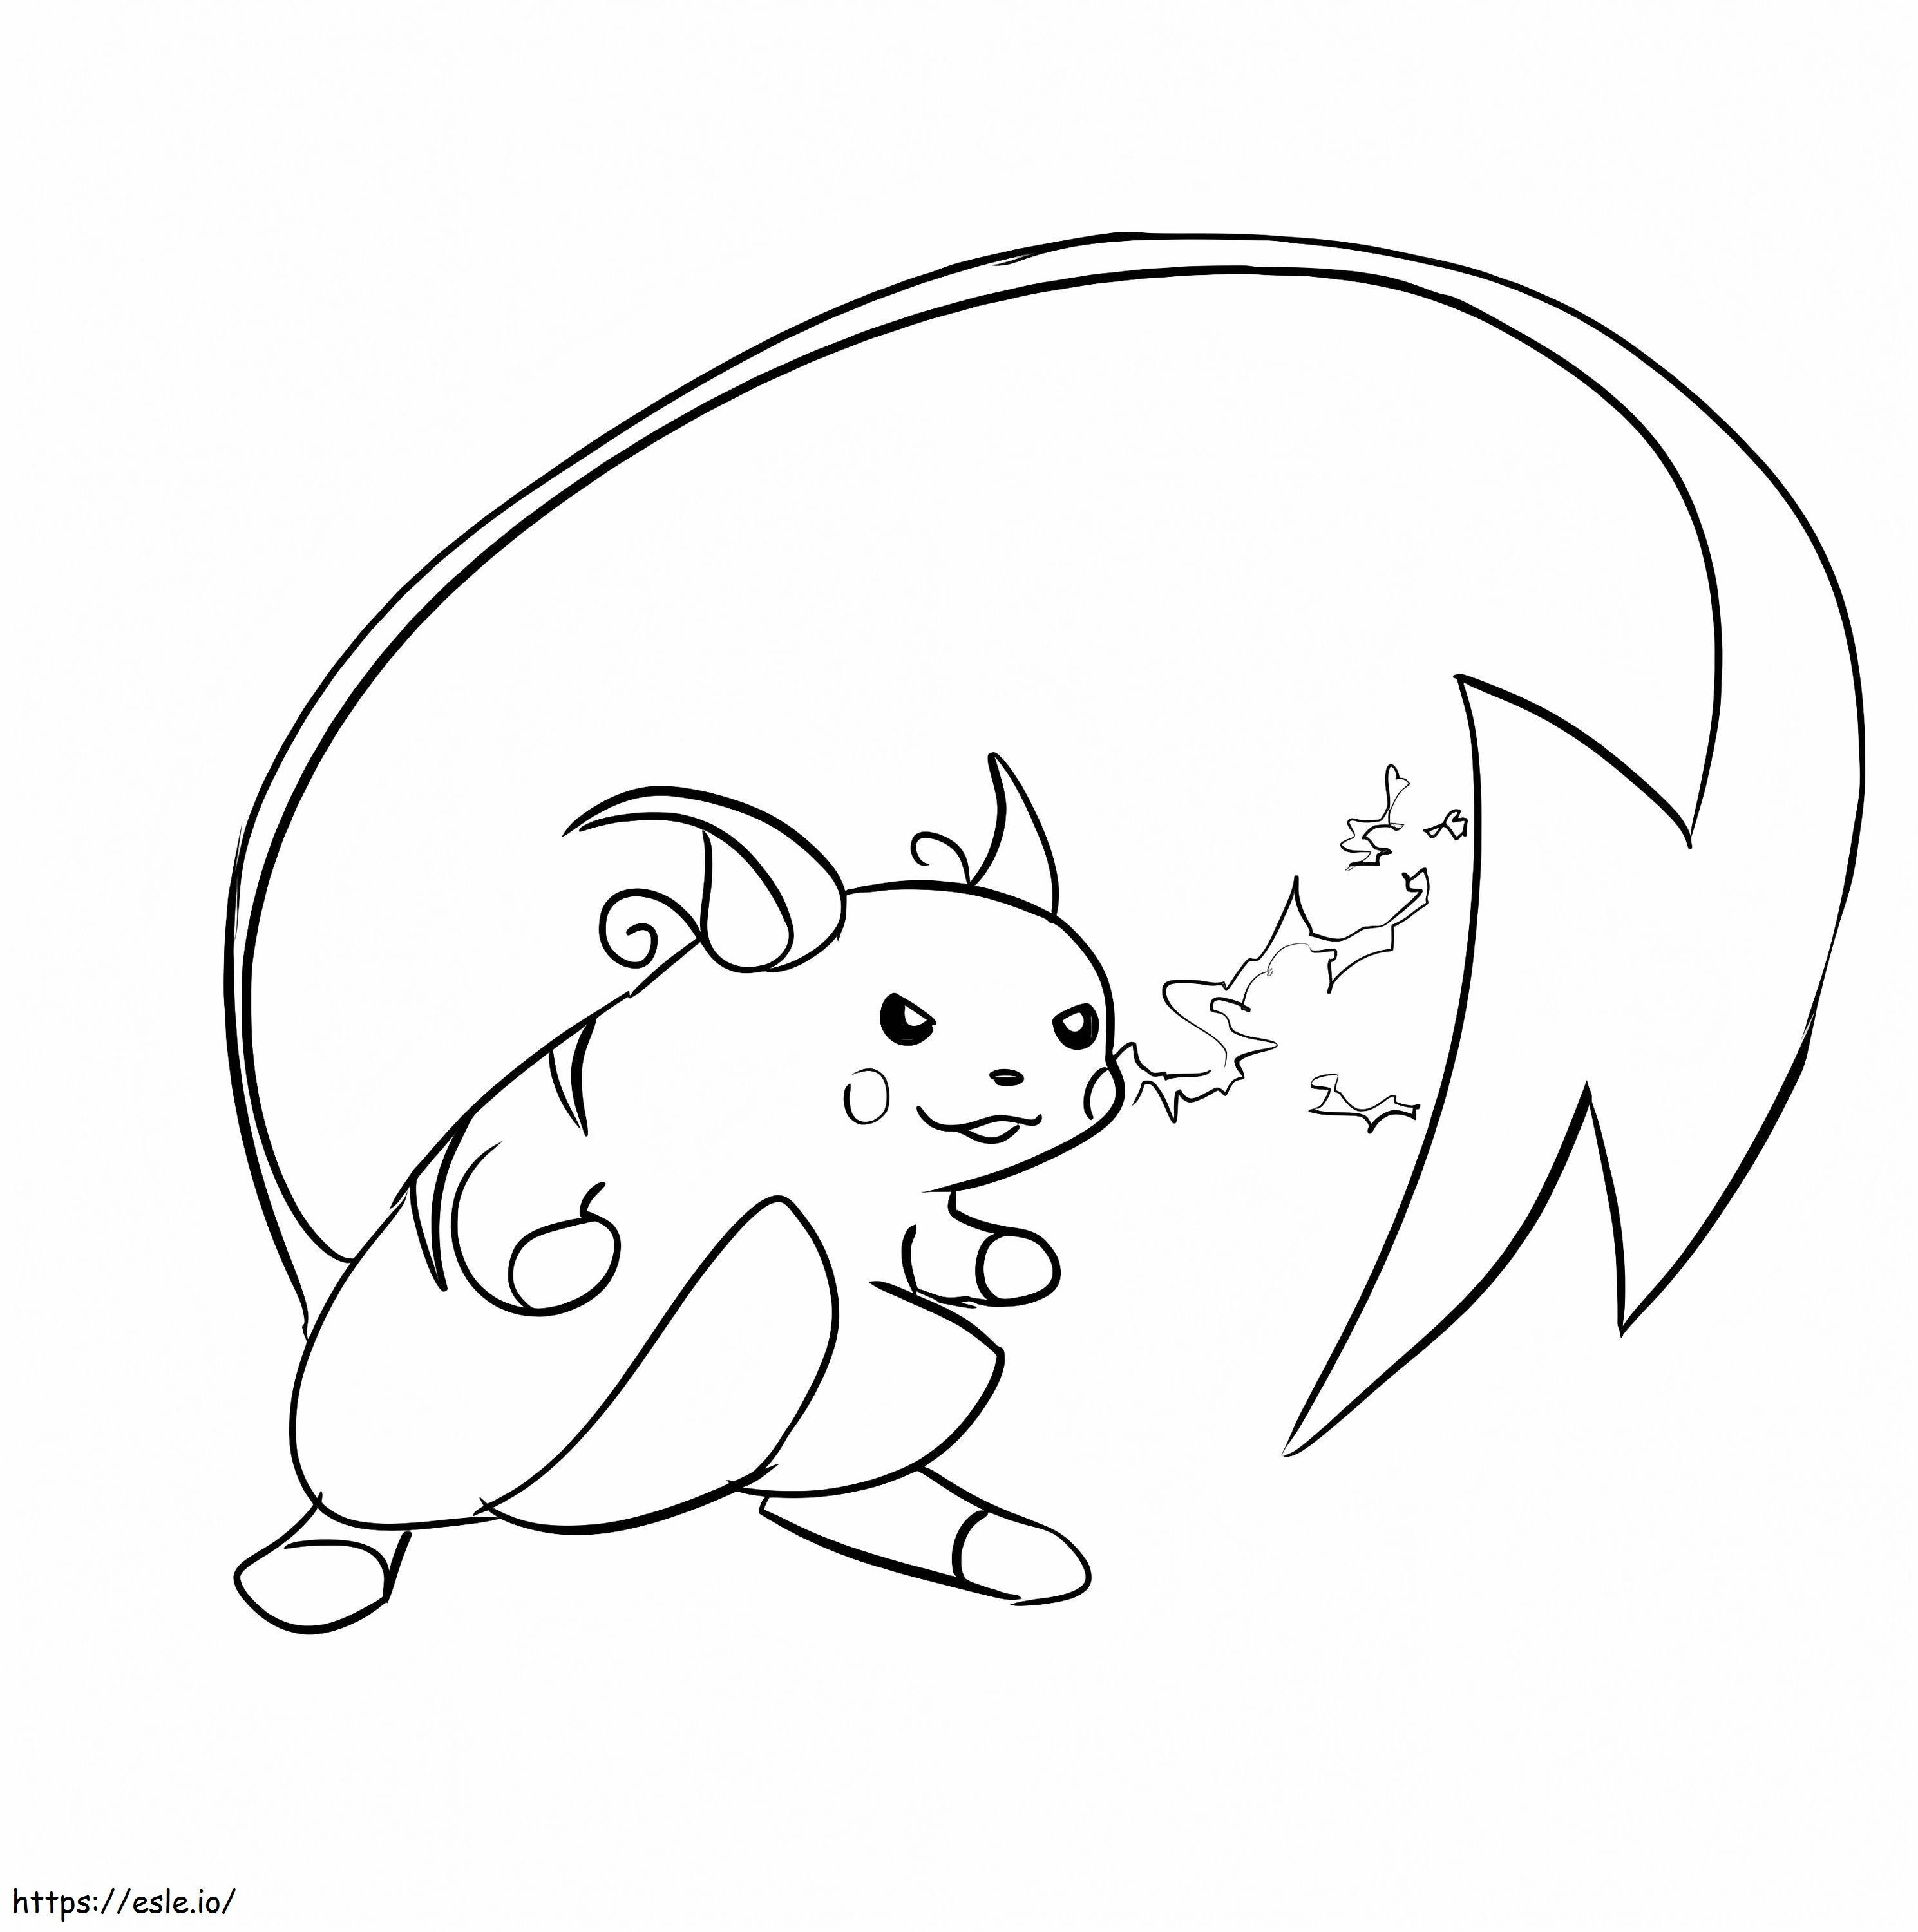 Coloriage Pokémon Raichu à imprimer dessin